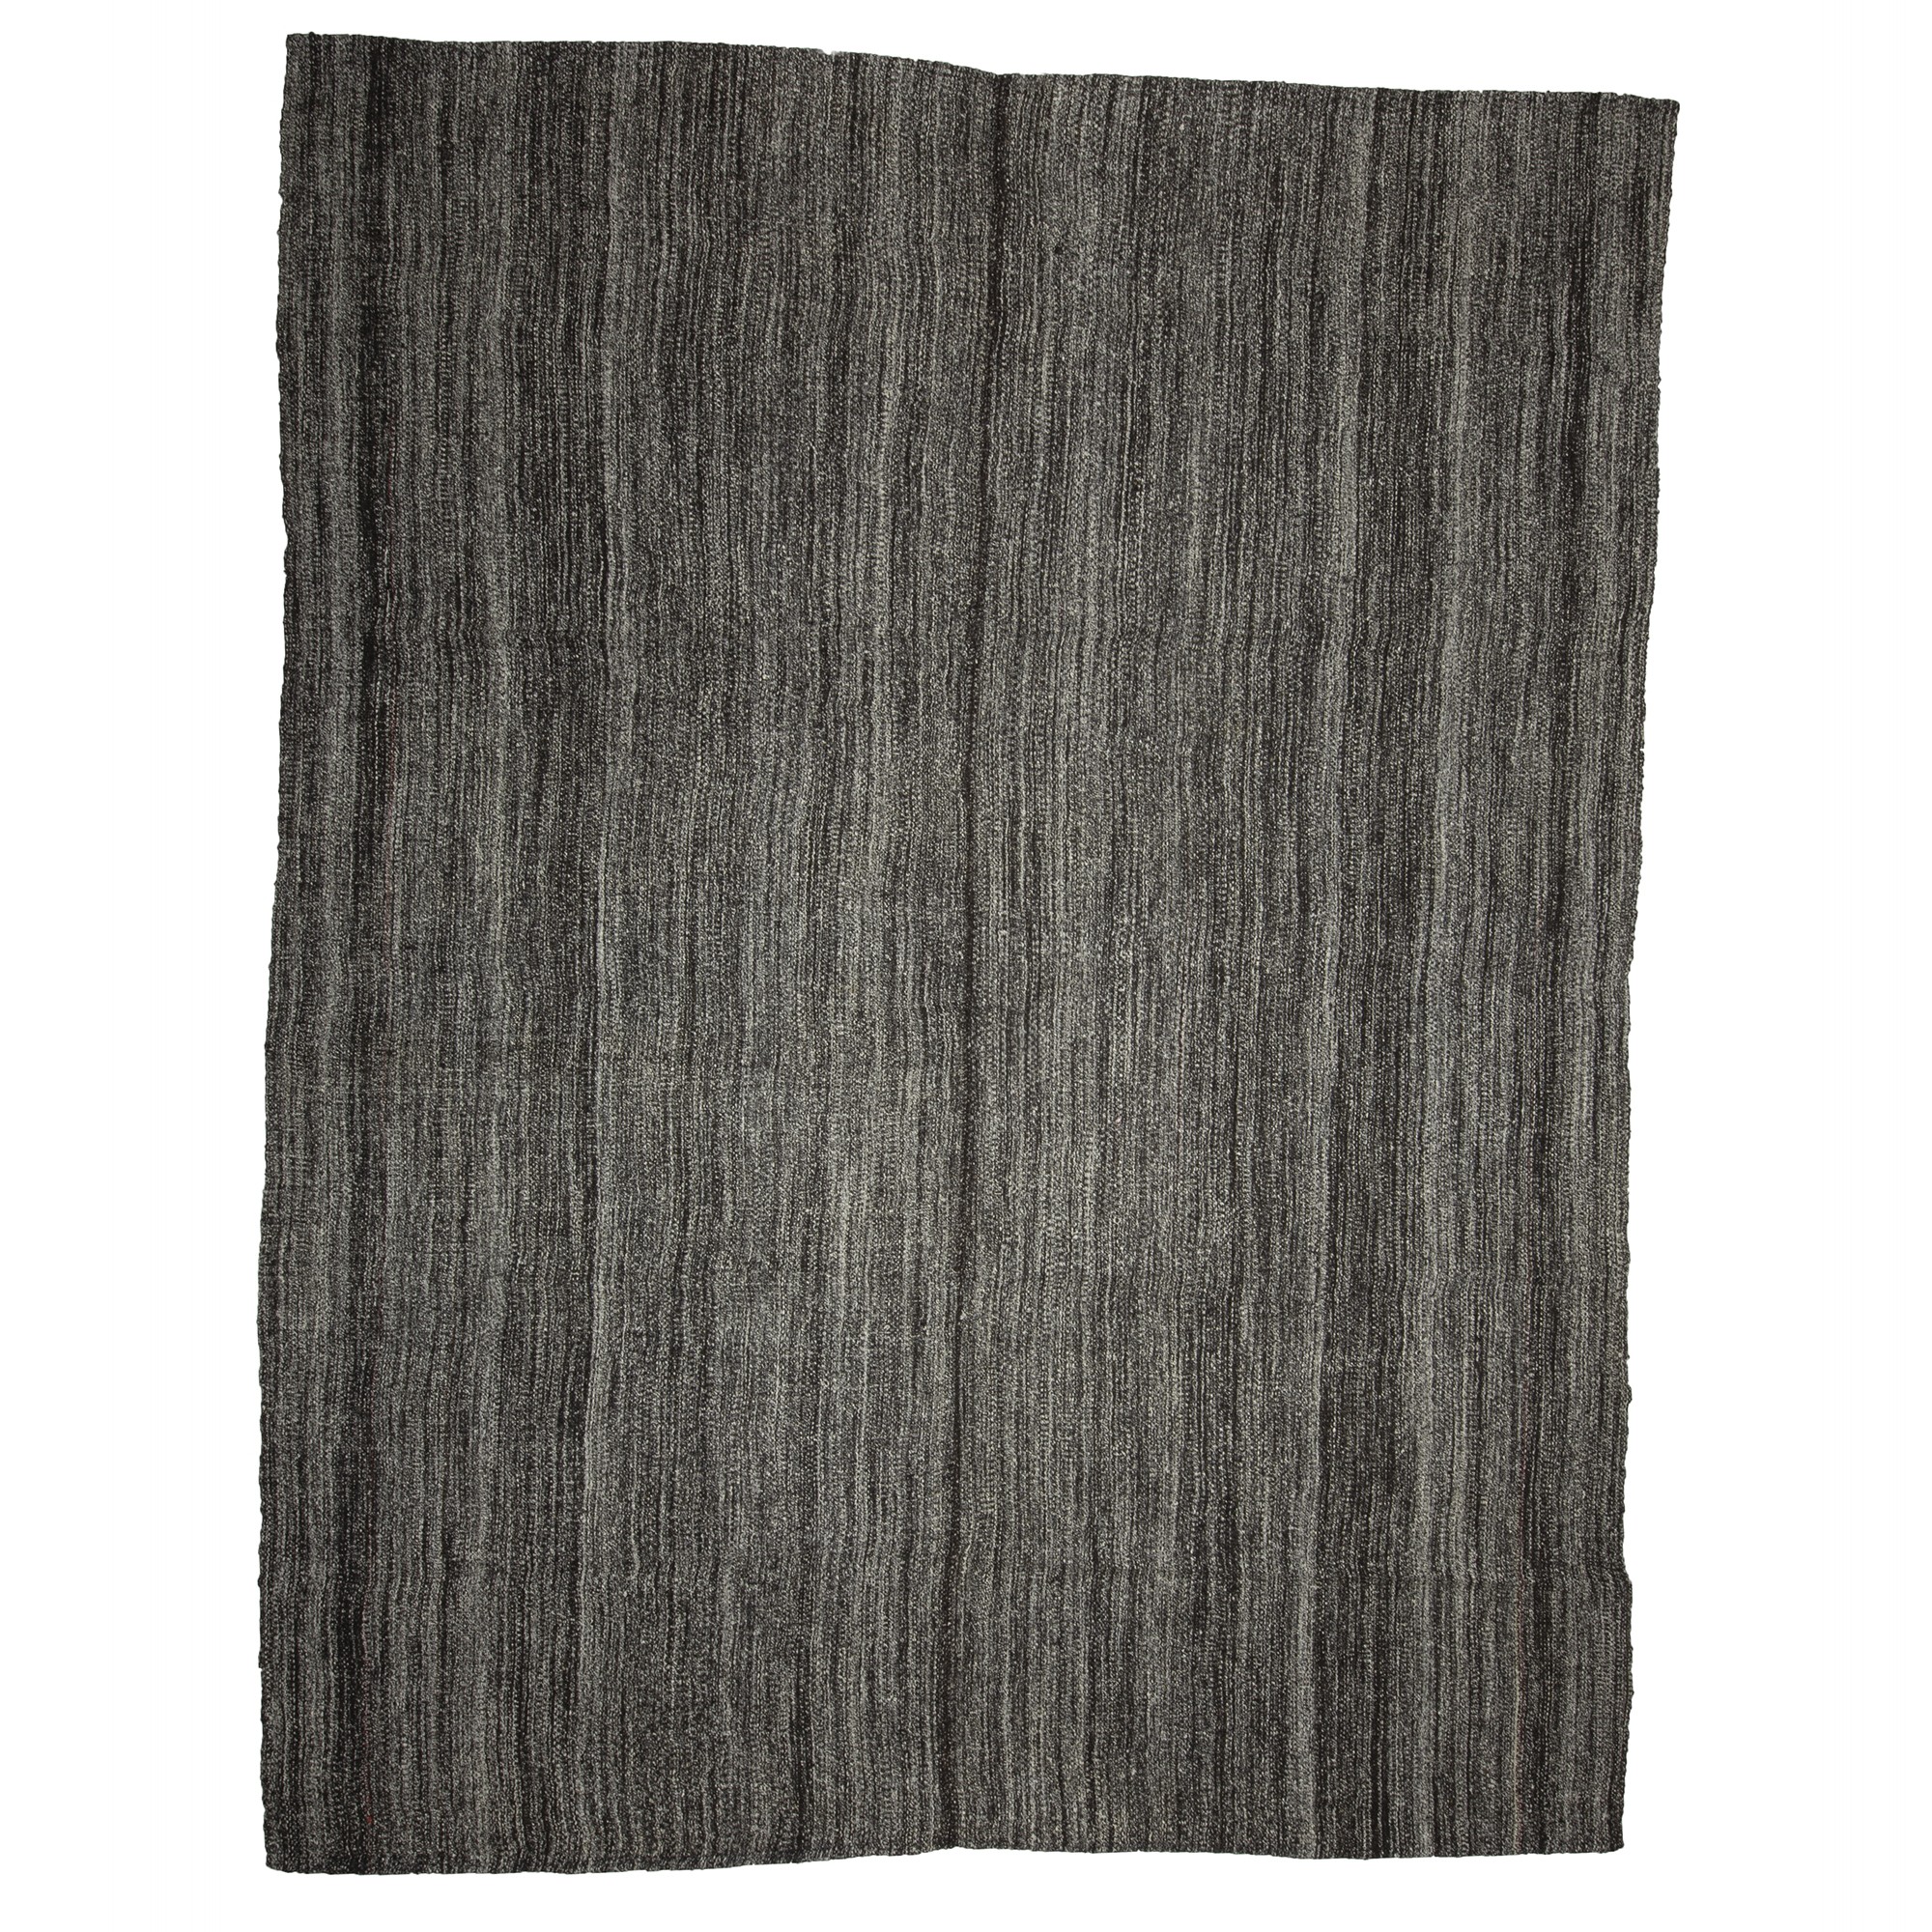 Primitive Striped Turkish Gray Kilim Rug 8x10 240,314 - Grey Turkish Rug 